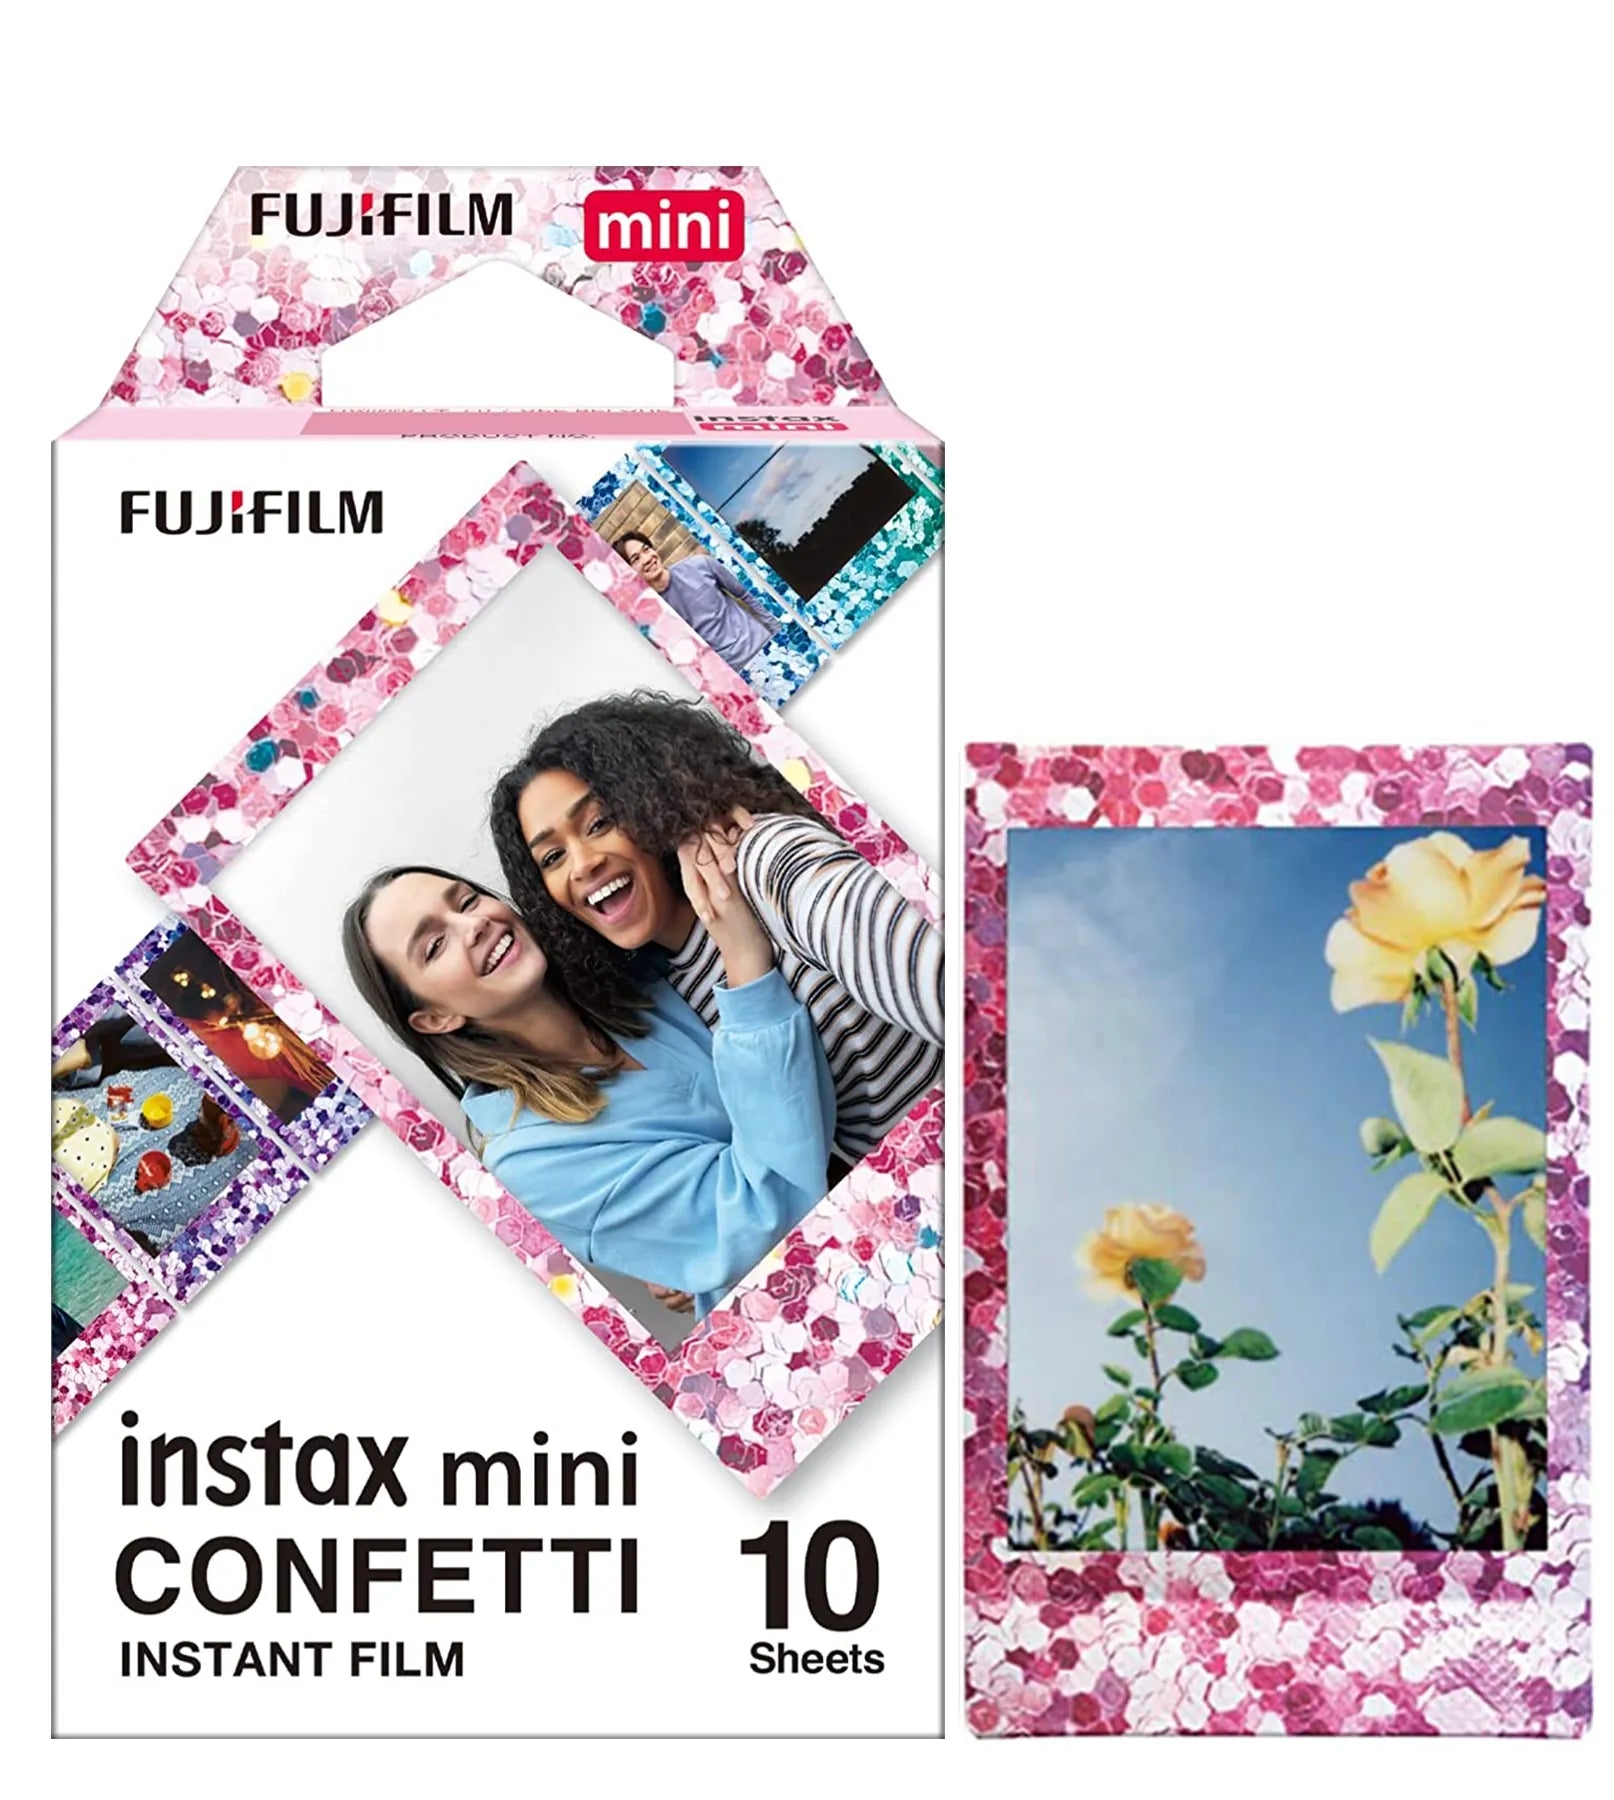 Fujifilm instax mini film - Confetti (10 shots)